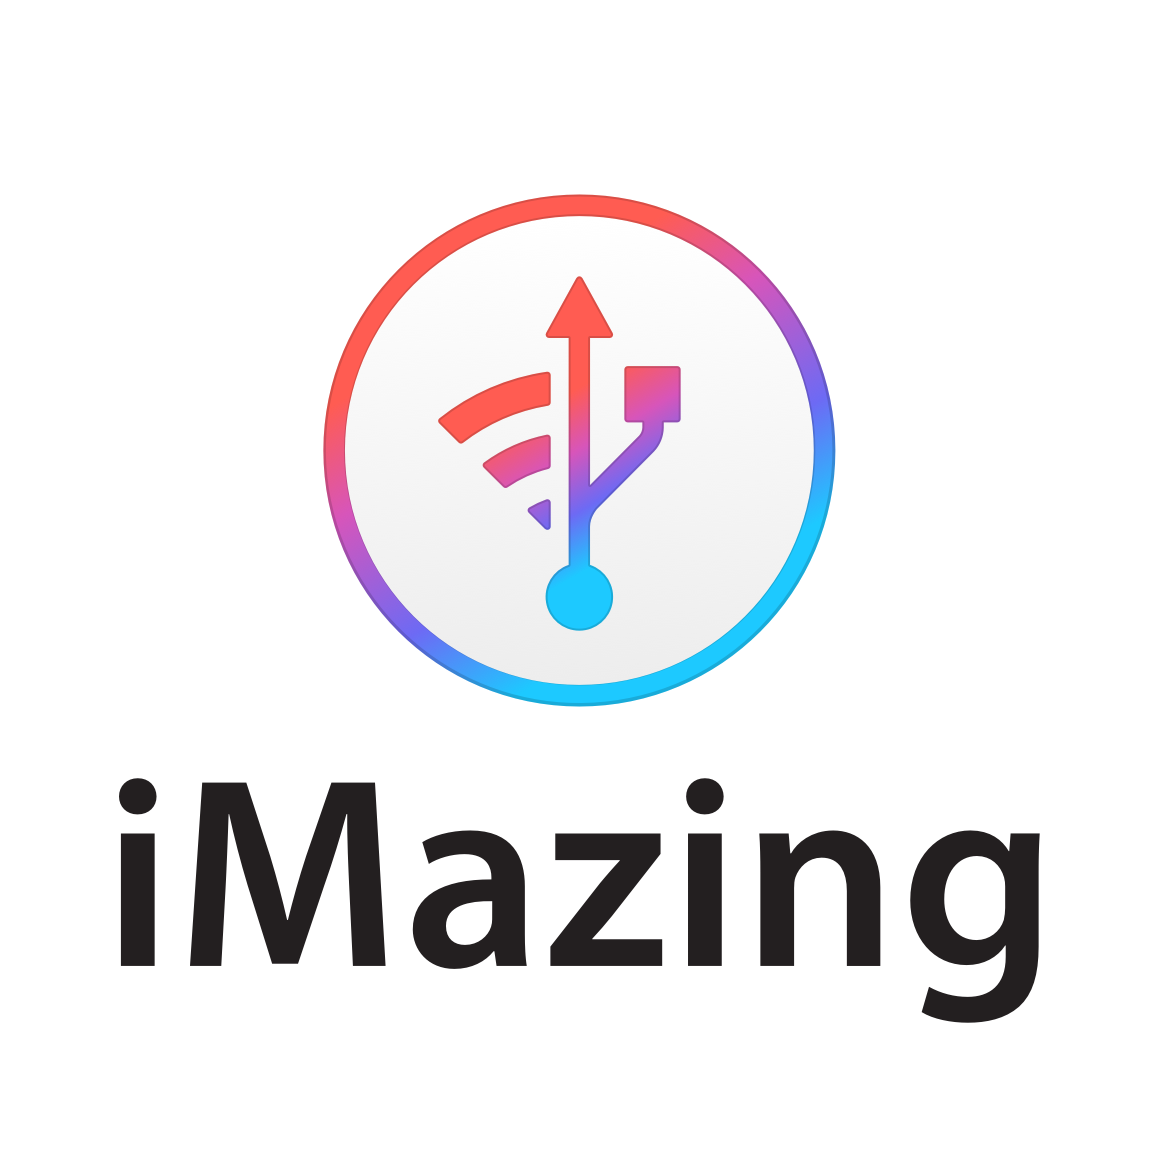 iMazing 2.17.17 Crack